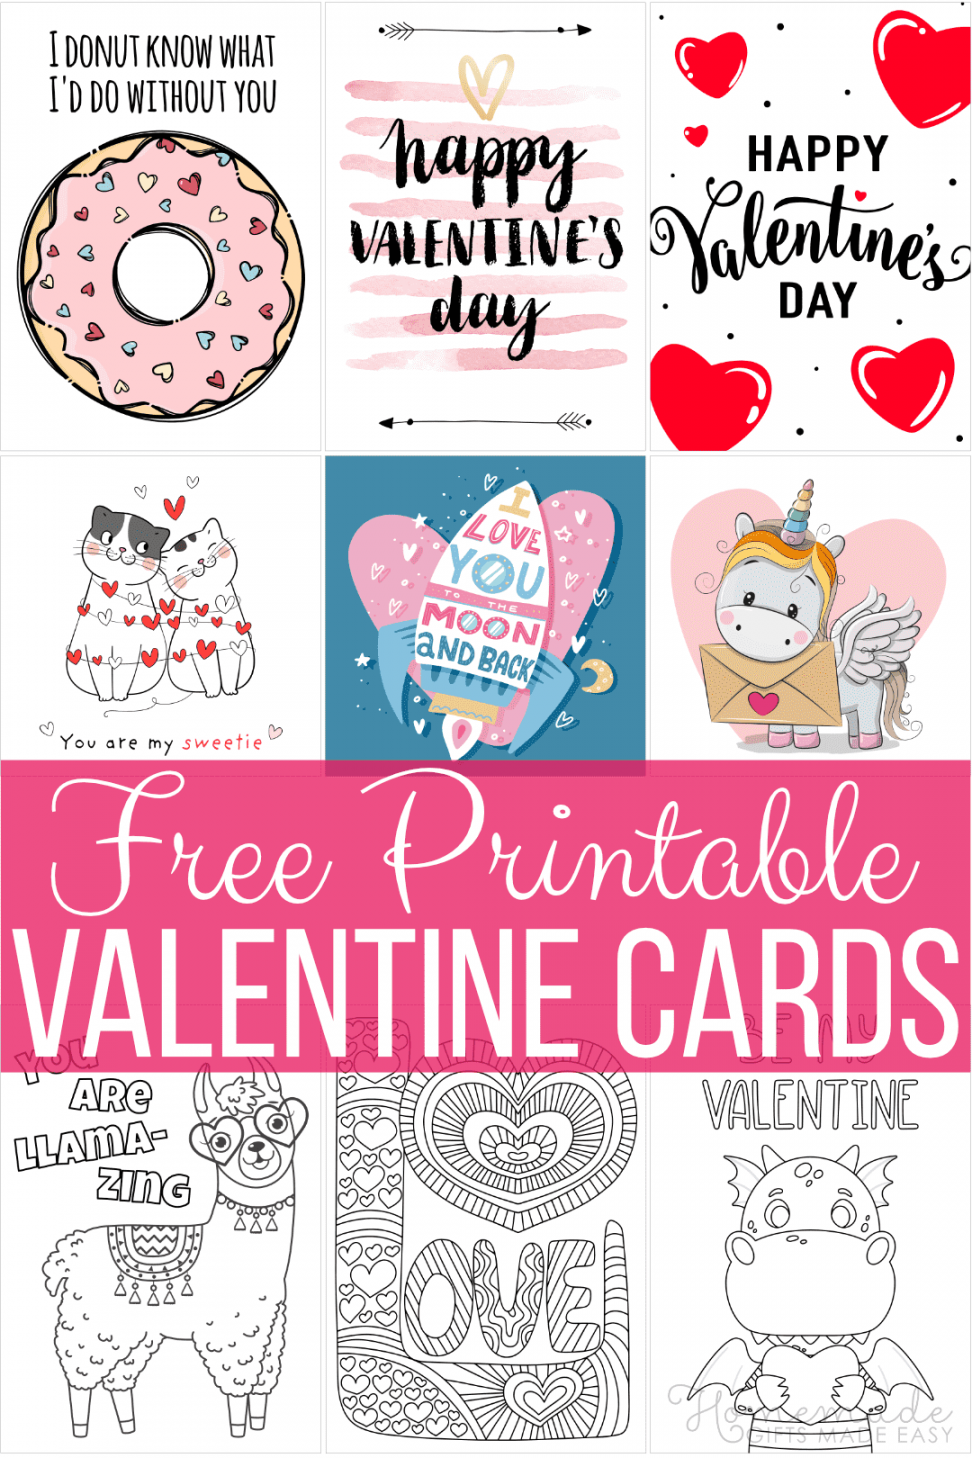 Free Printable Valentine Cards - Printable -  Free Printable Valentine Cards for